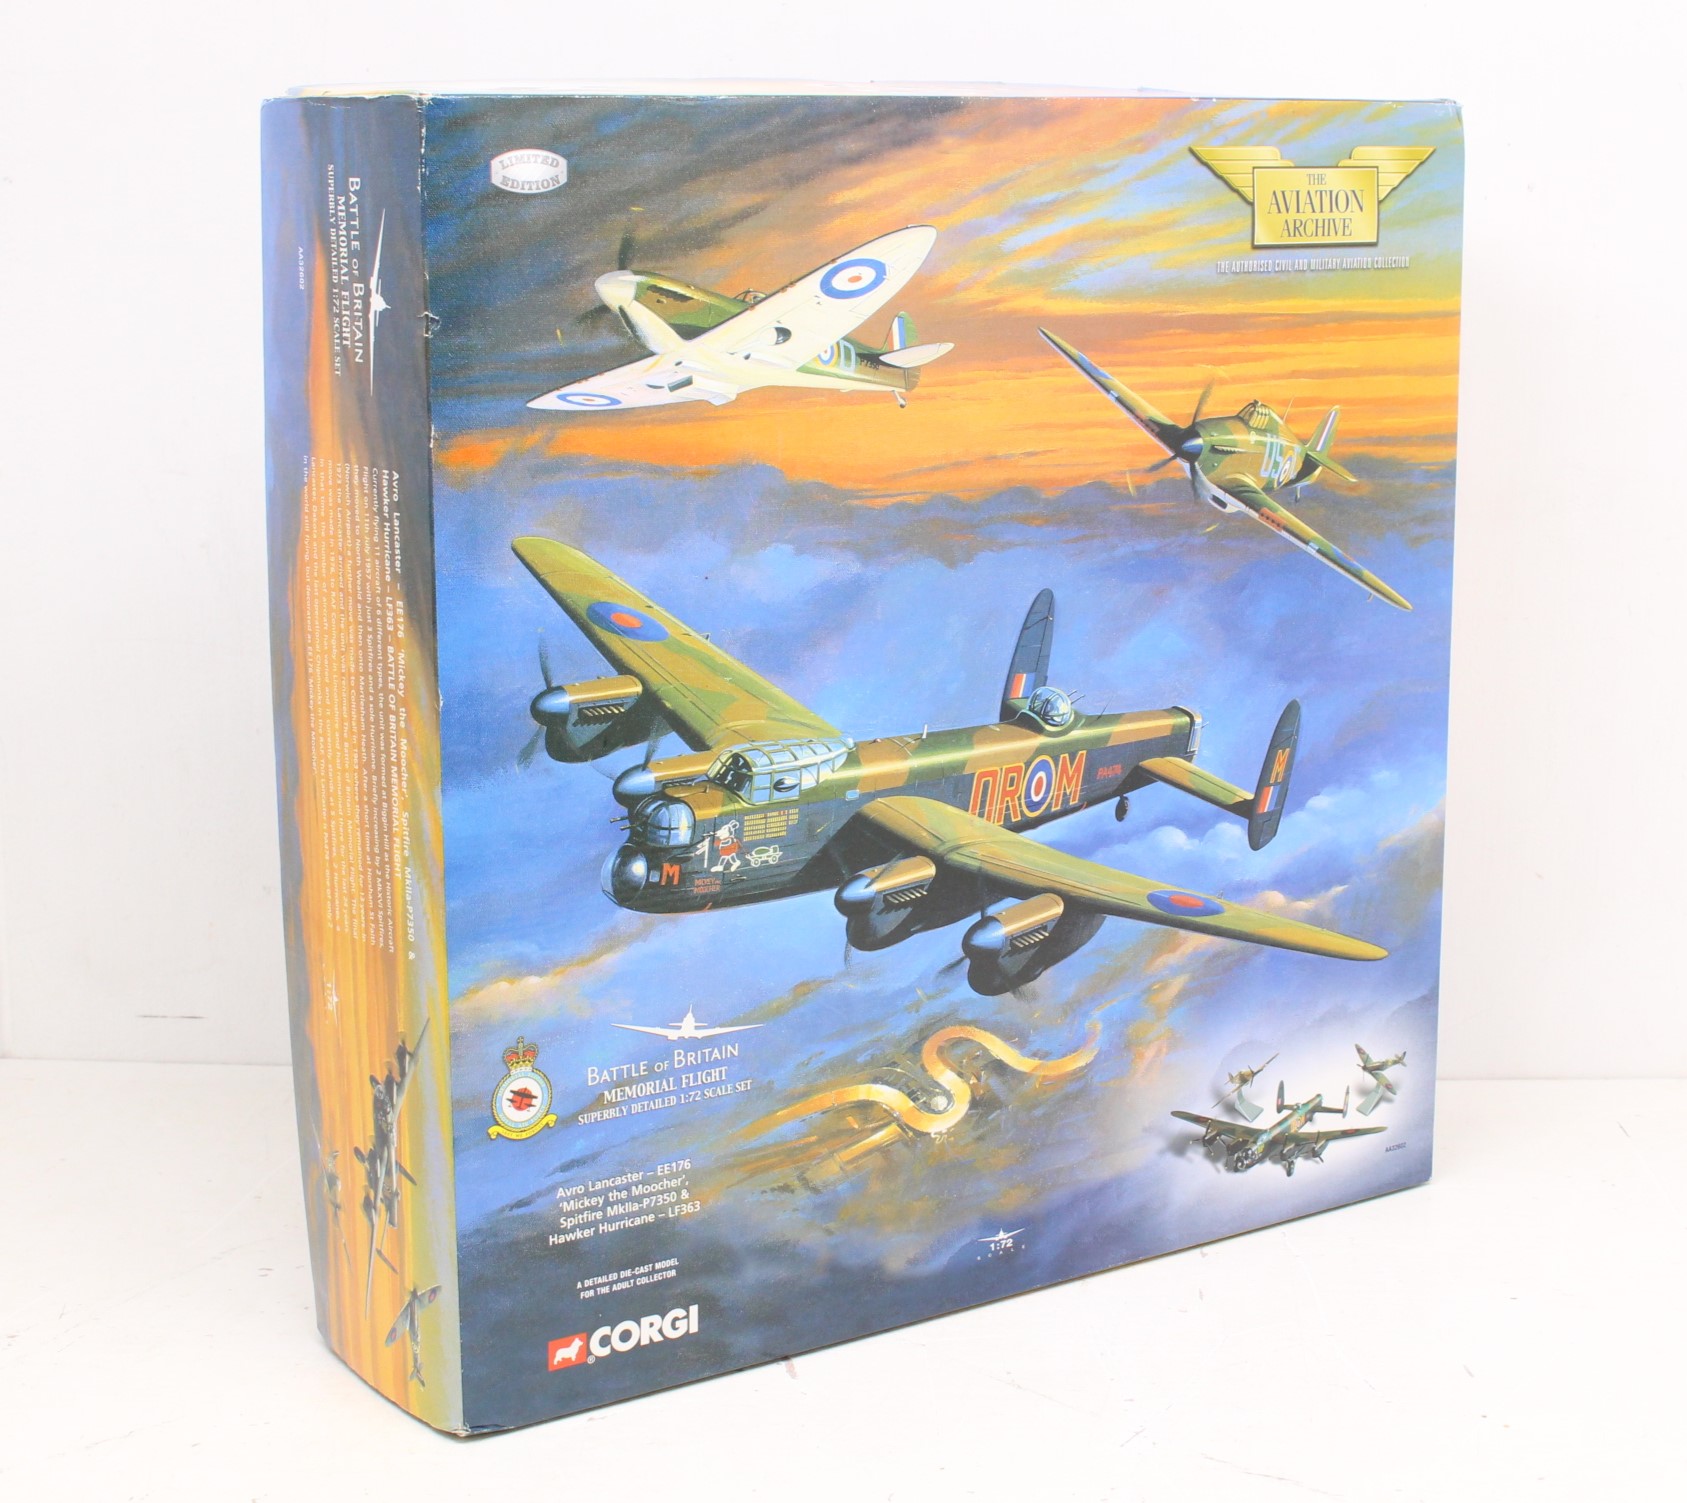 Corgi: A boxed Corgi: The Aviation Archive, Avro Lancaster - EE176 'Mickey the Moocher', Spitfire - Image 2 of 3